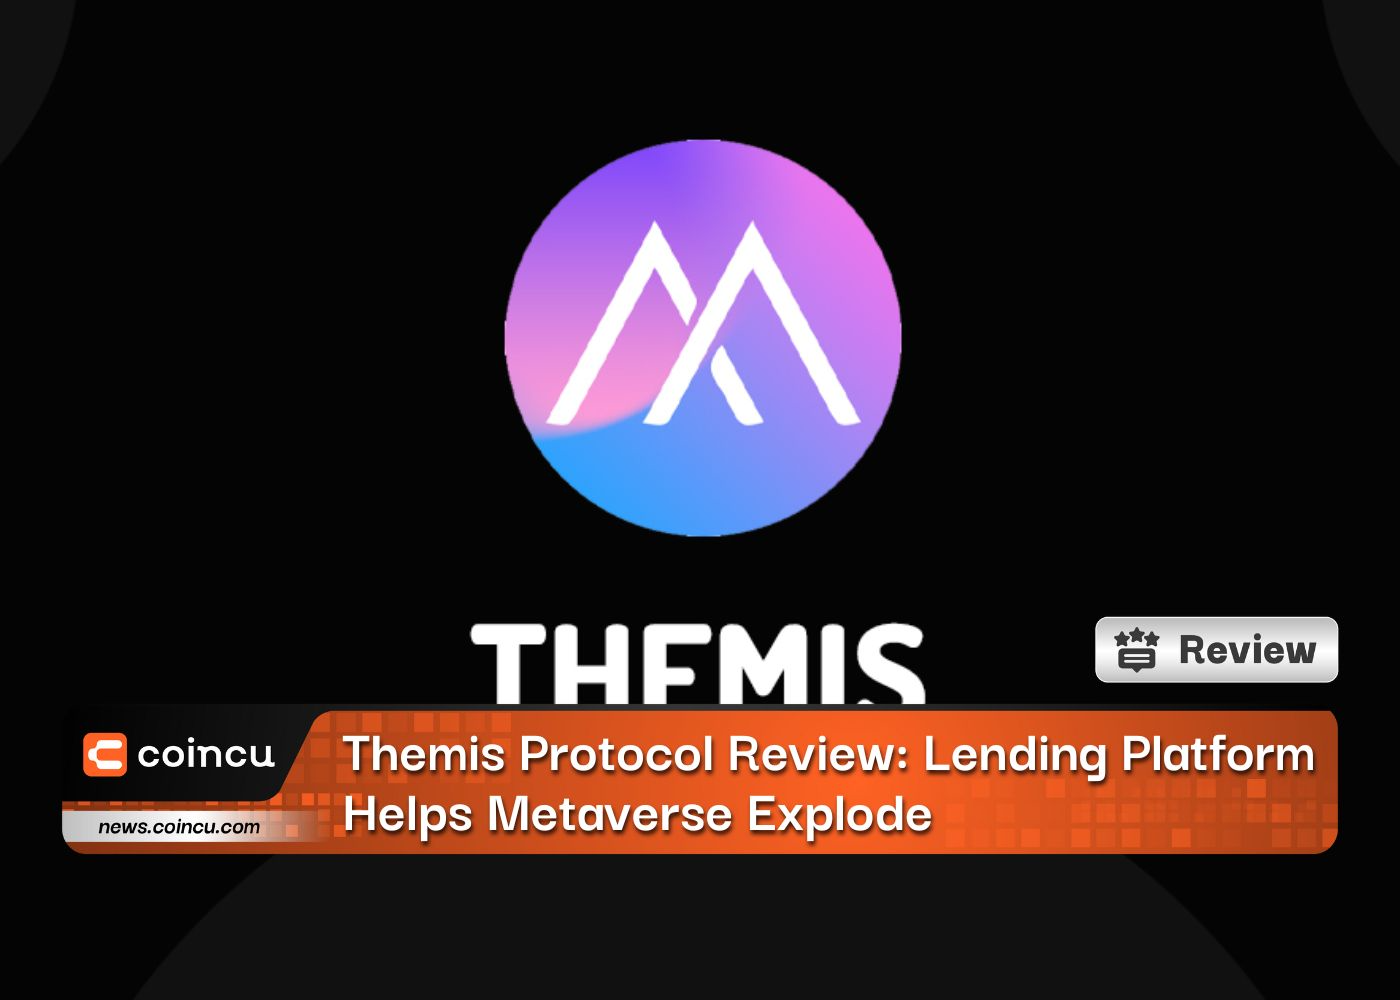 Themis Protocol Review: Lending Platform Helps Metaverse Explode